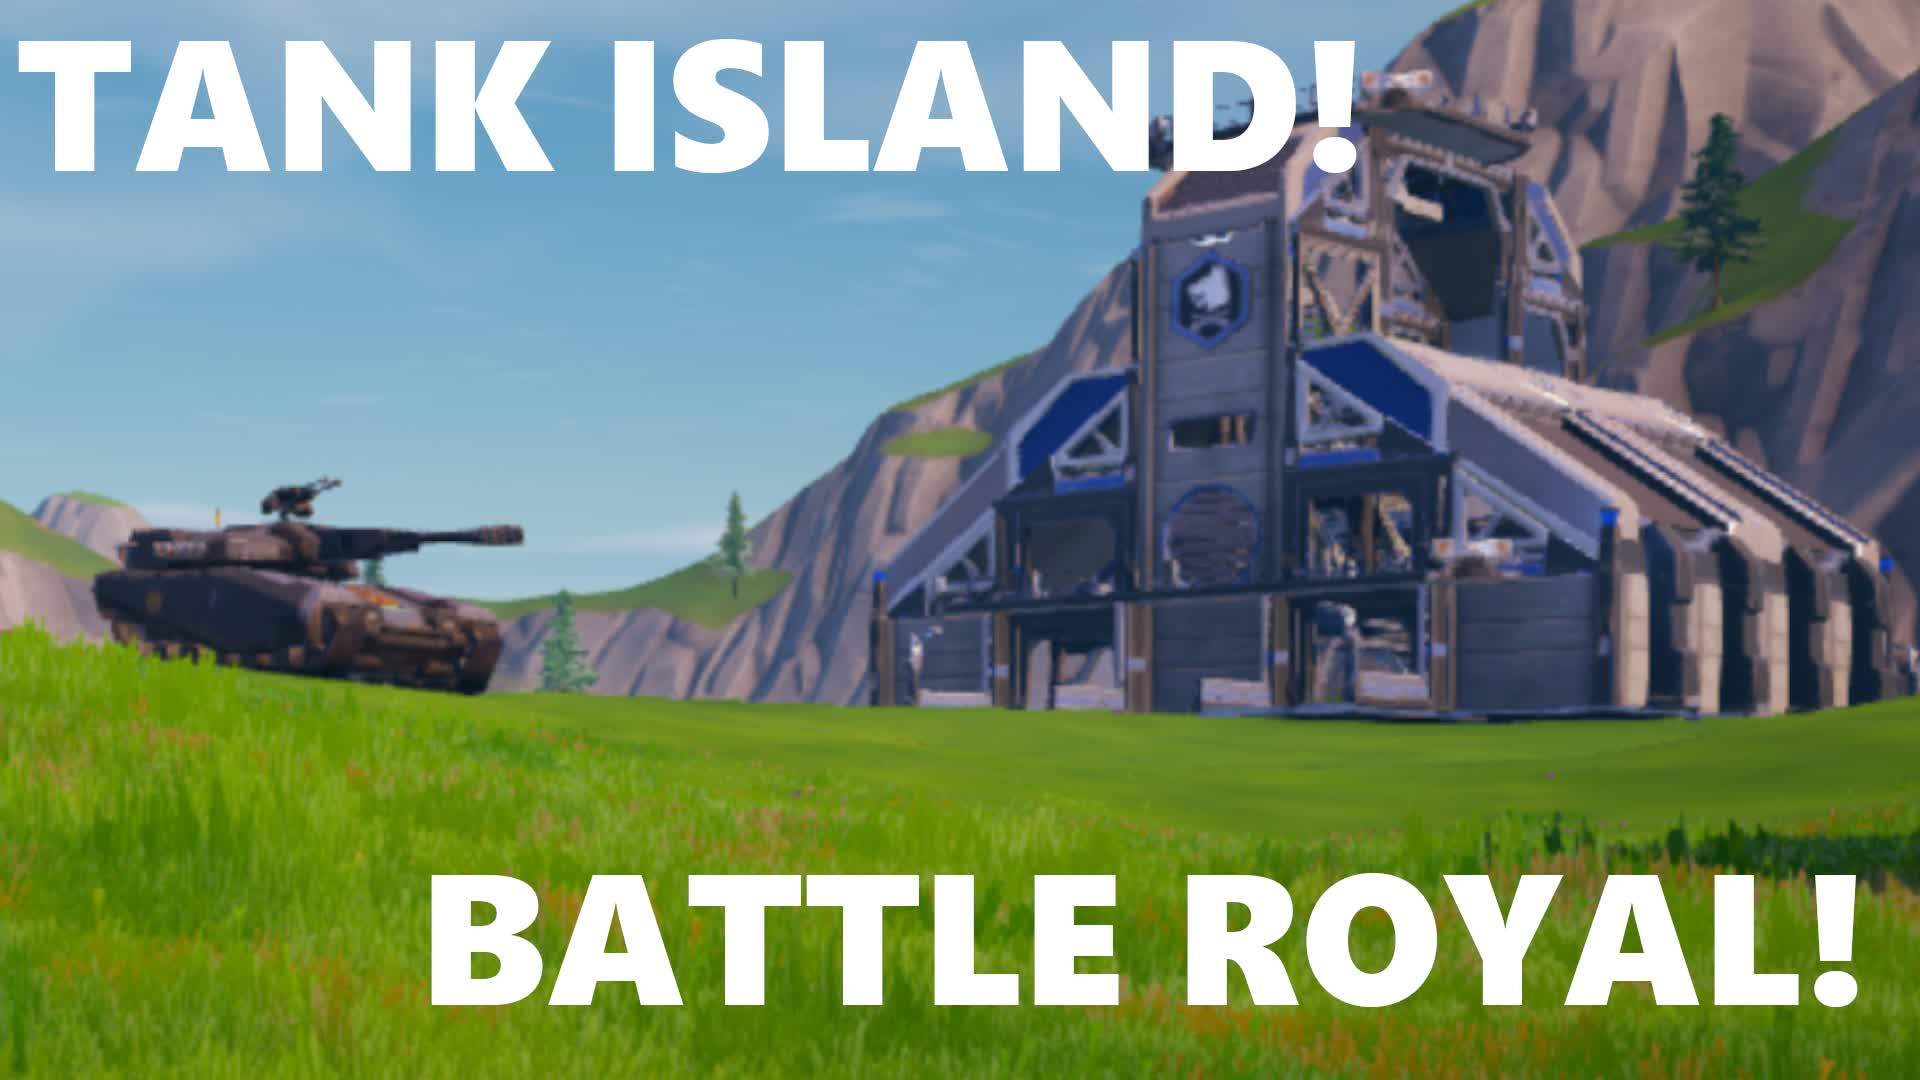 BATTLE ROYAL ON TANK ISLAND!